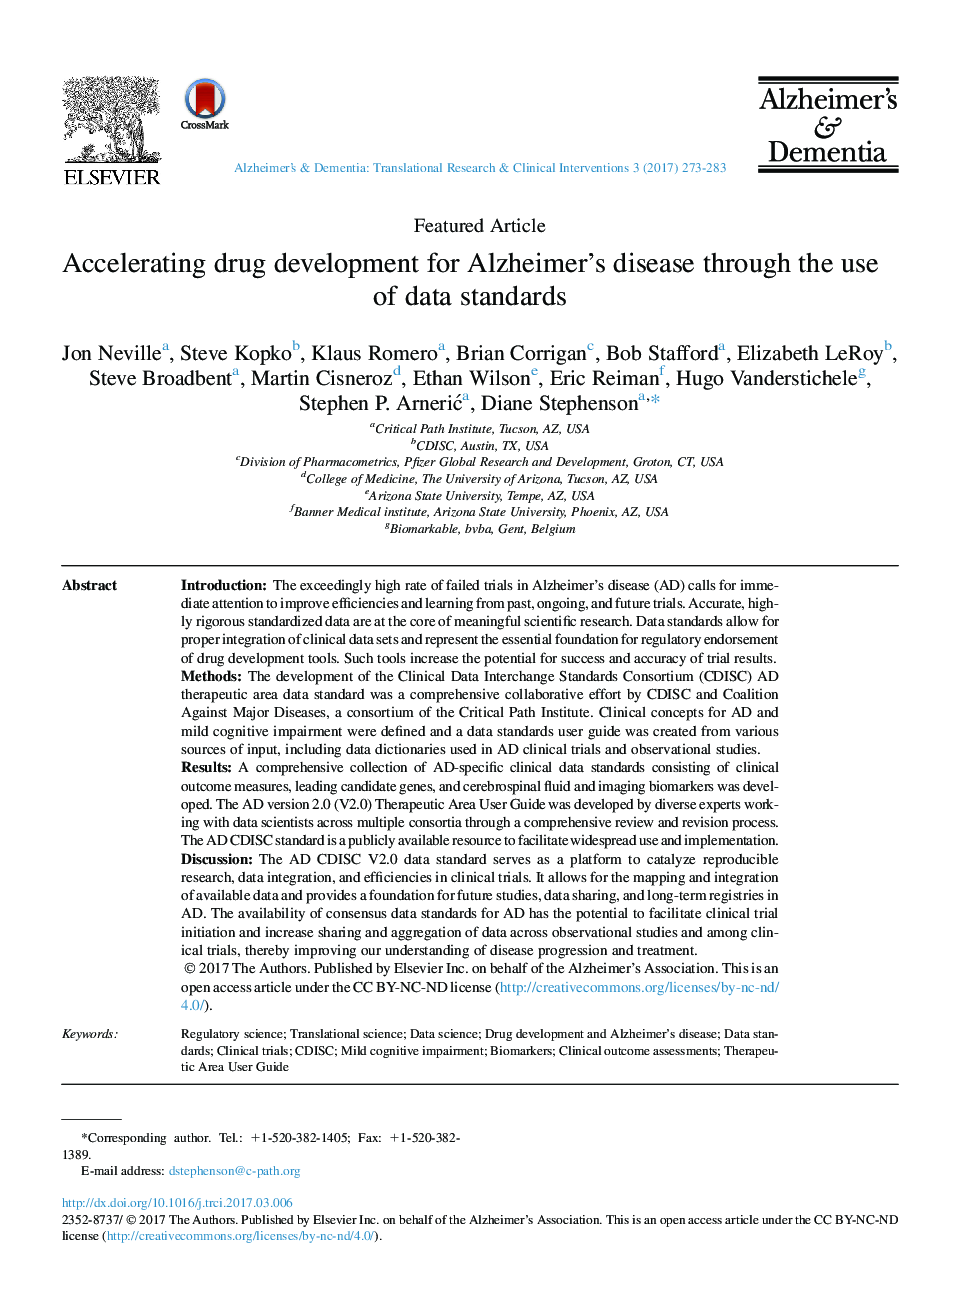 Accelerating drug development for Alzheimer's disease through the use of data standards